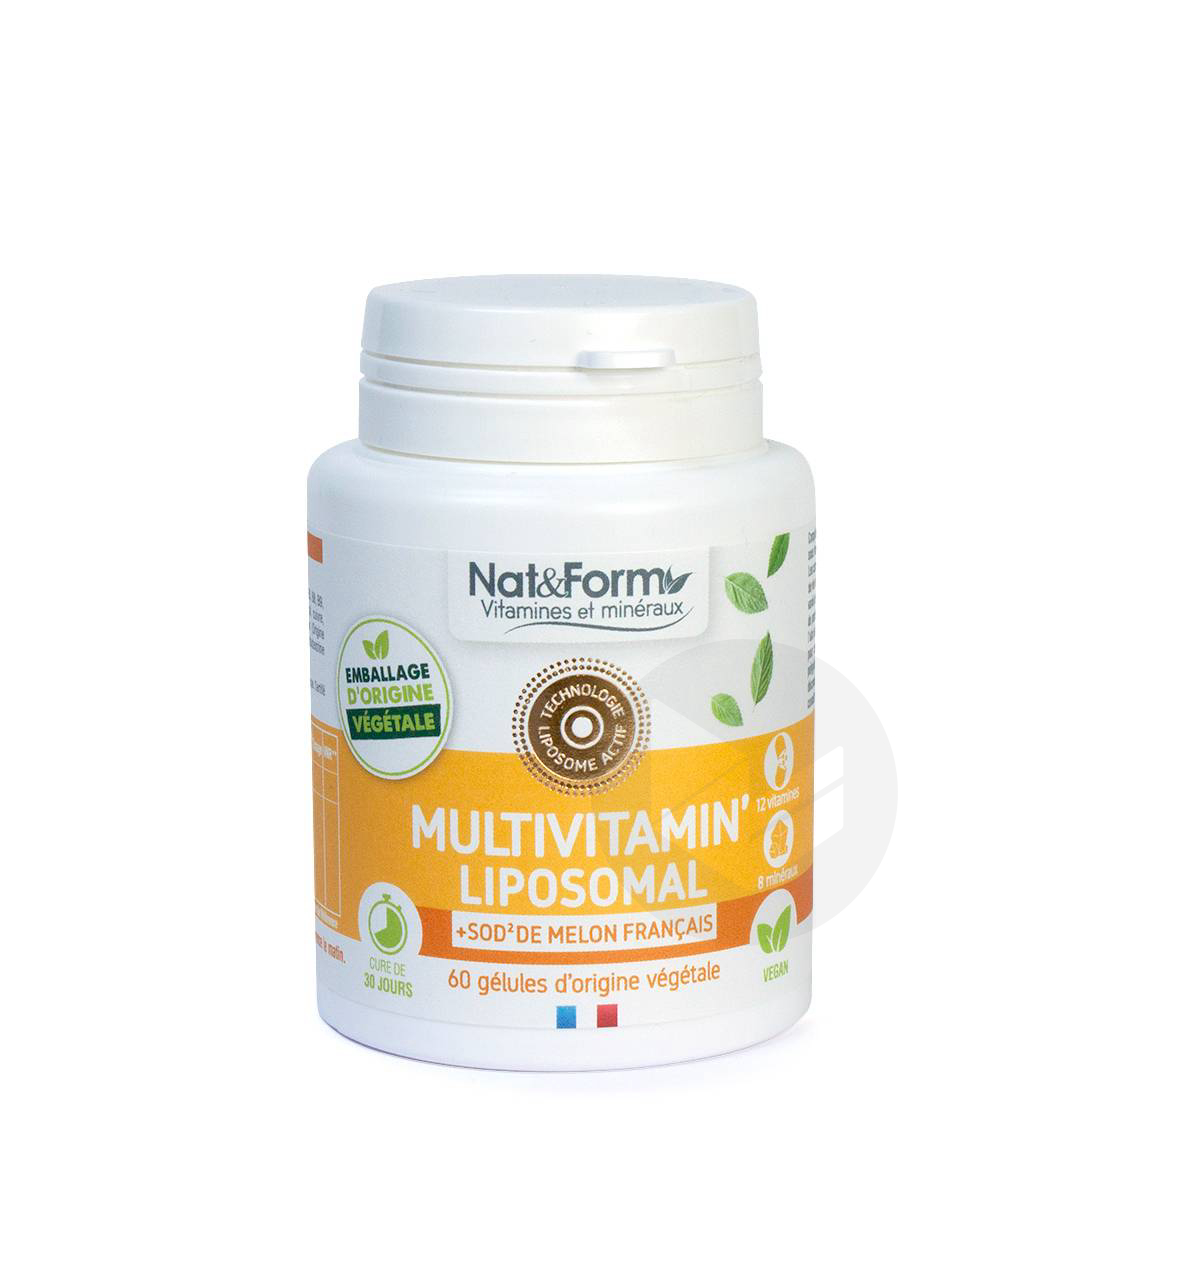 Multivitamin’ liposomal 60 gélules